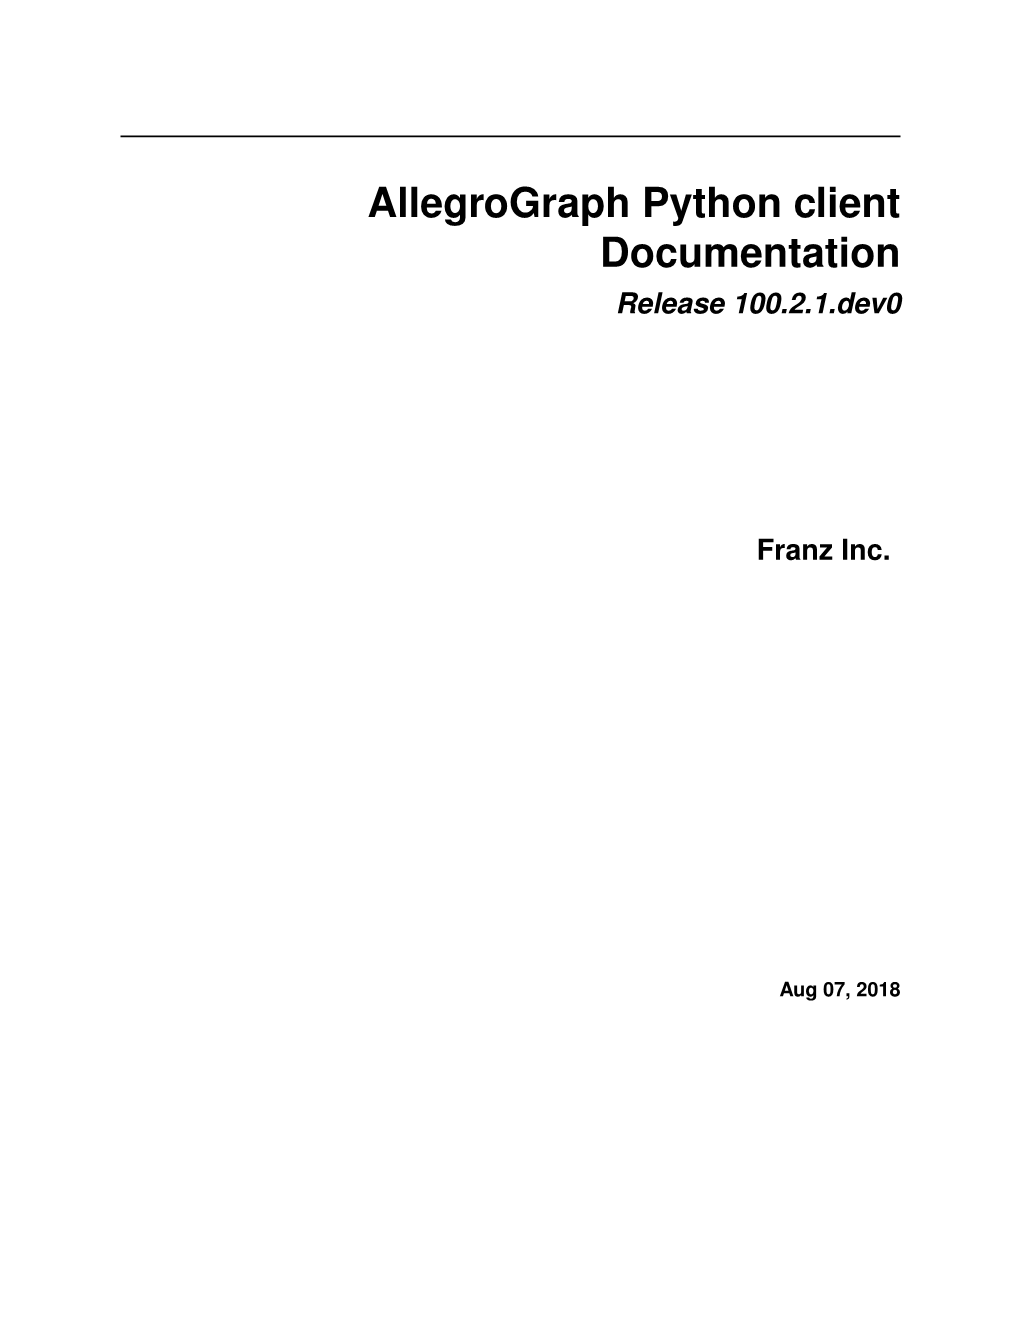 Allegrograph Python Client Documentation Release 100.2.1.Dev0